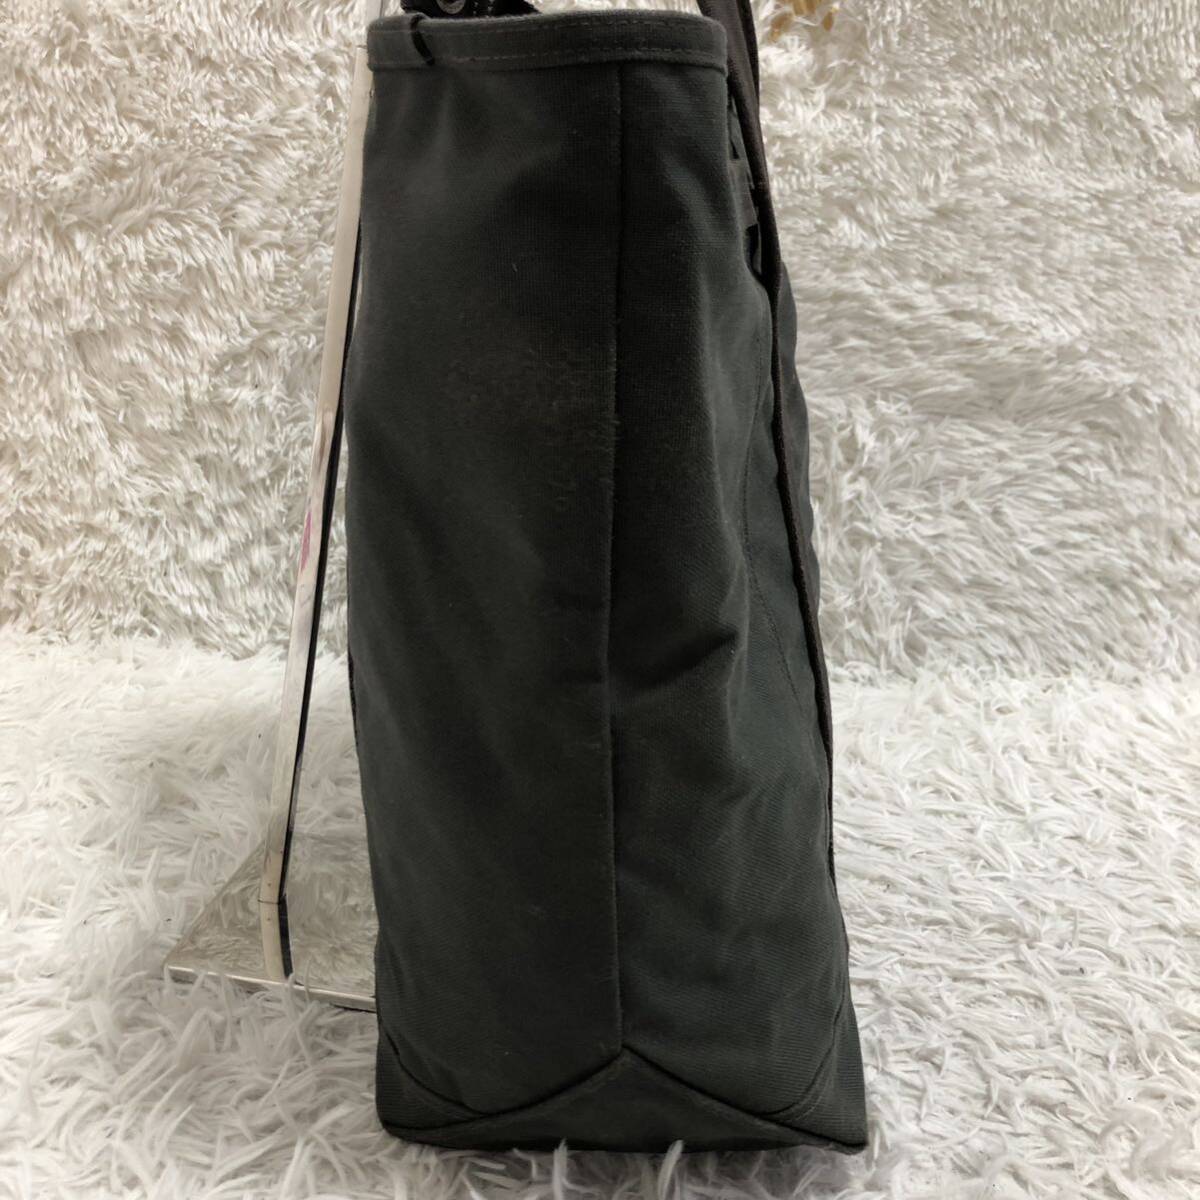 1 jpy hard-to-find Porter tote bag men's hybrid porter A4 materials high capacity nylon cordura Yoshida bag commuting business bag black 